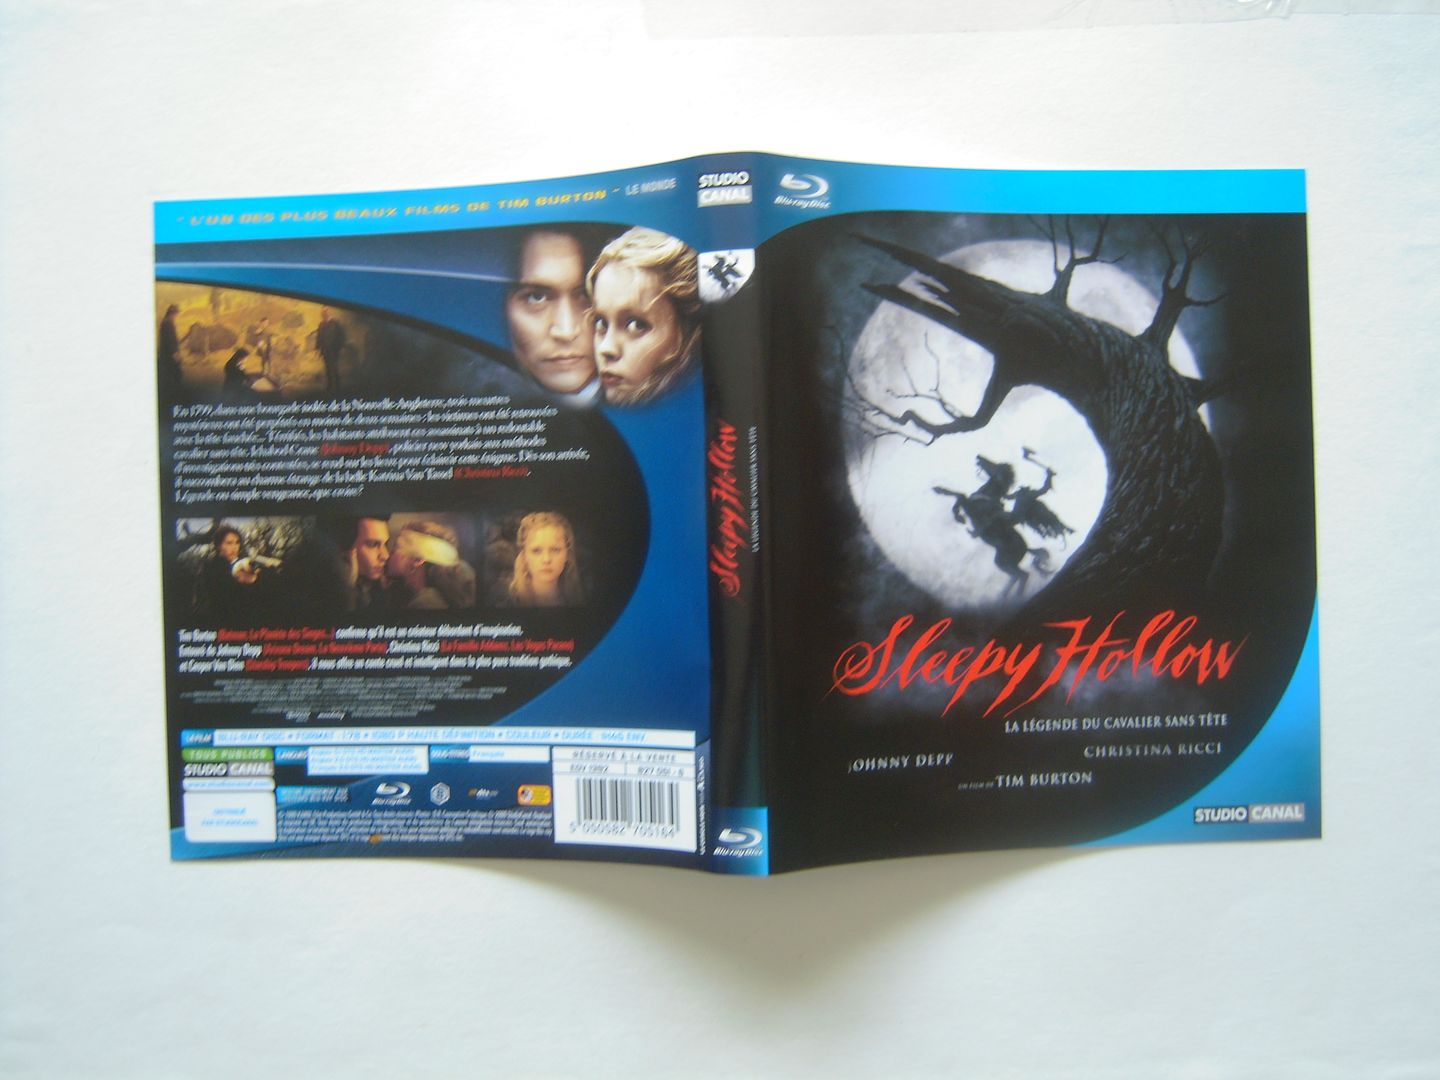 Sleepy Hollow - DVD/Bluray DSCN2303